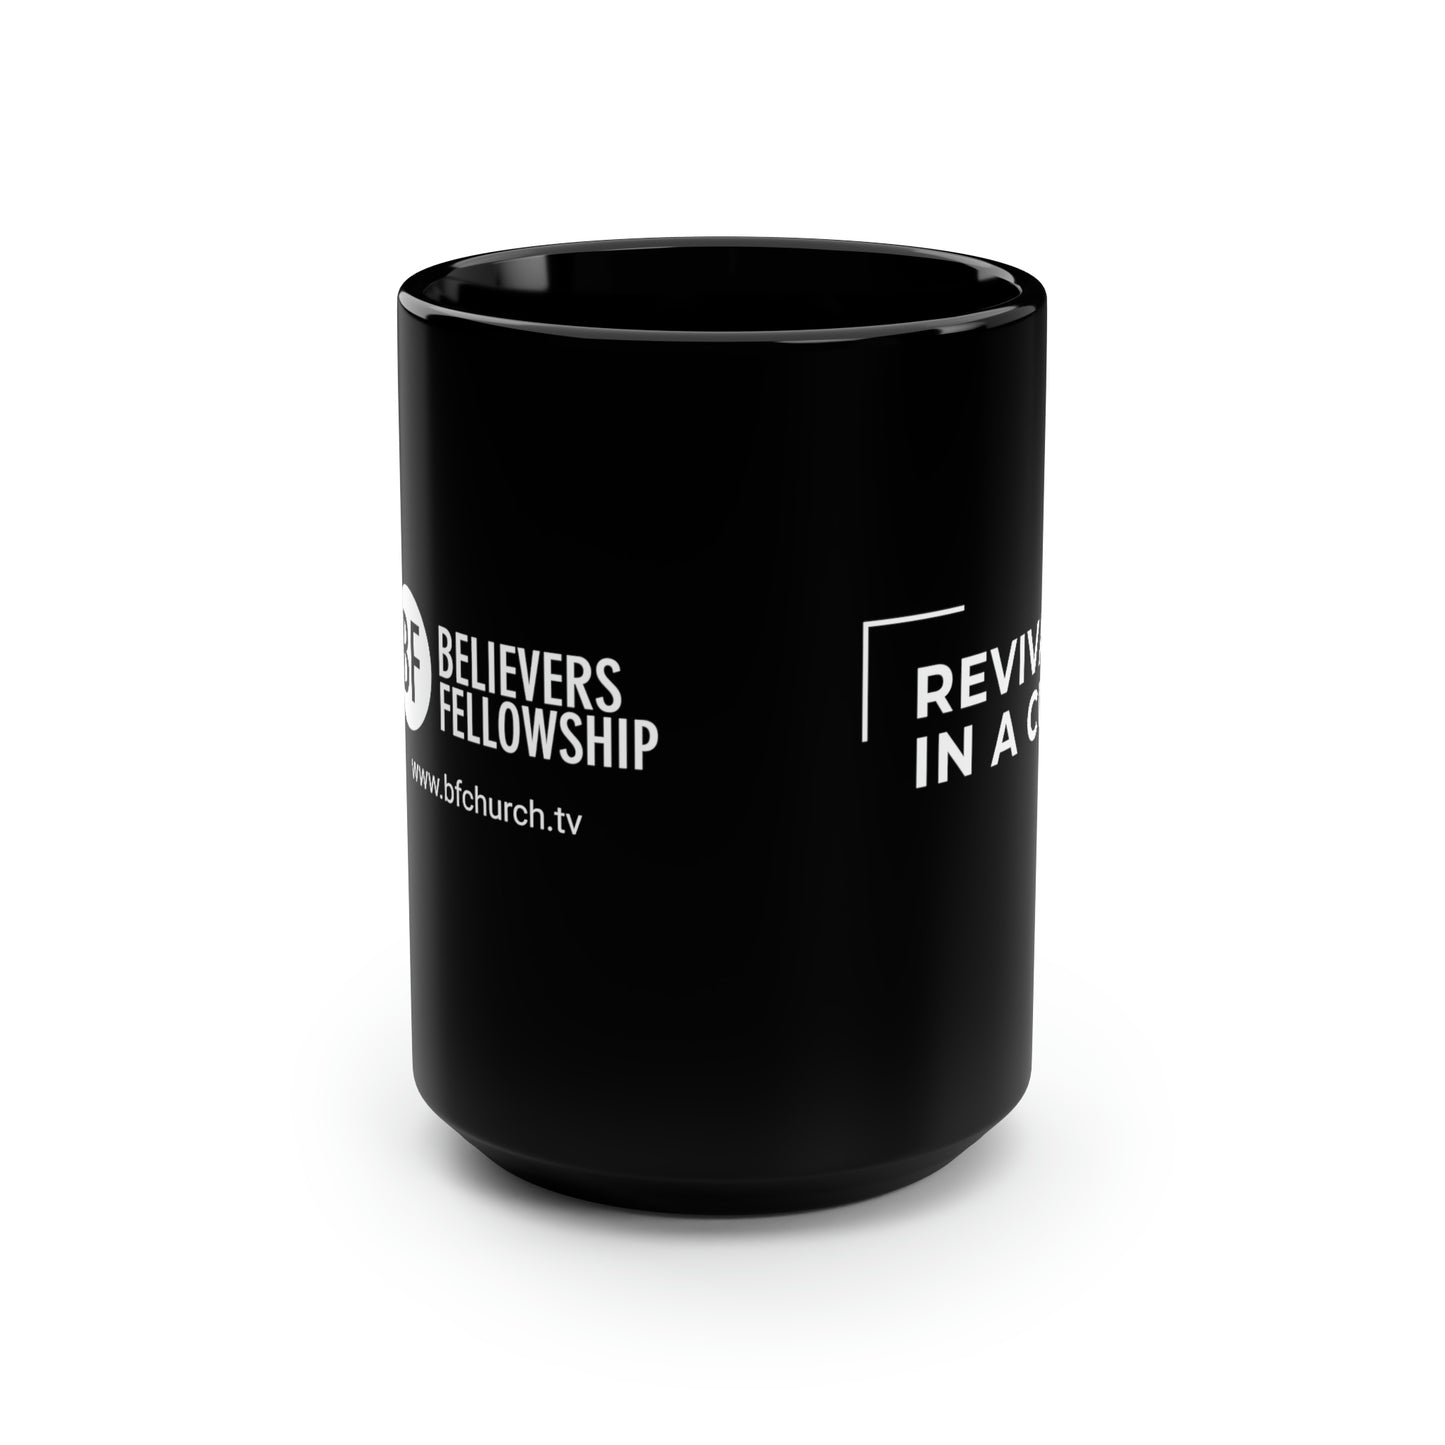 "Revival In A Cup" Mug, 15oz